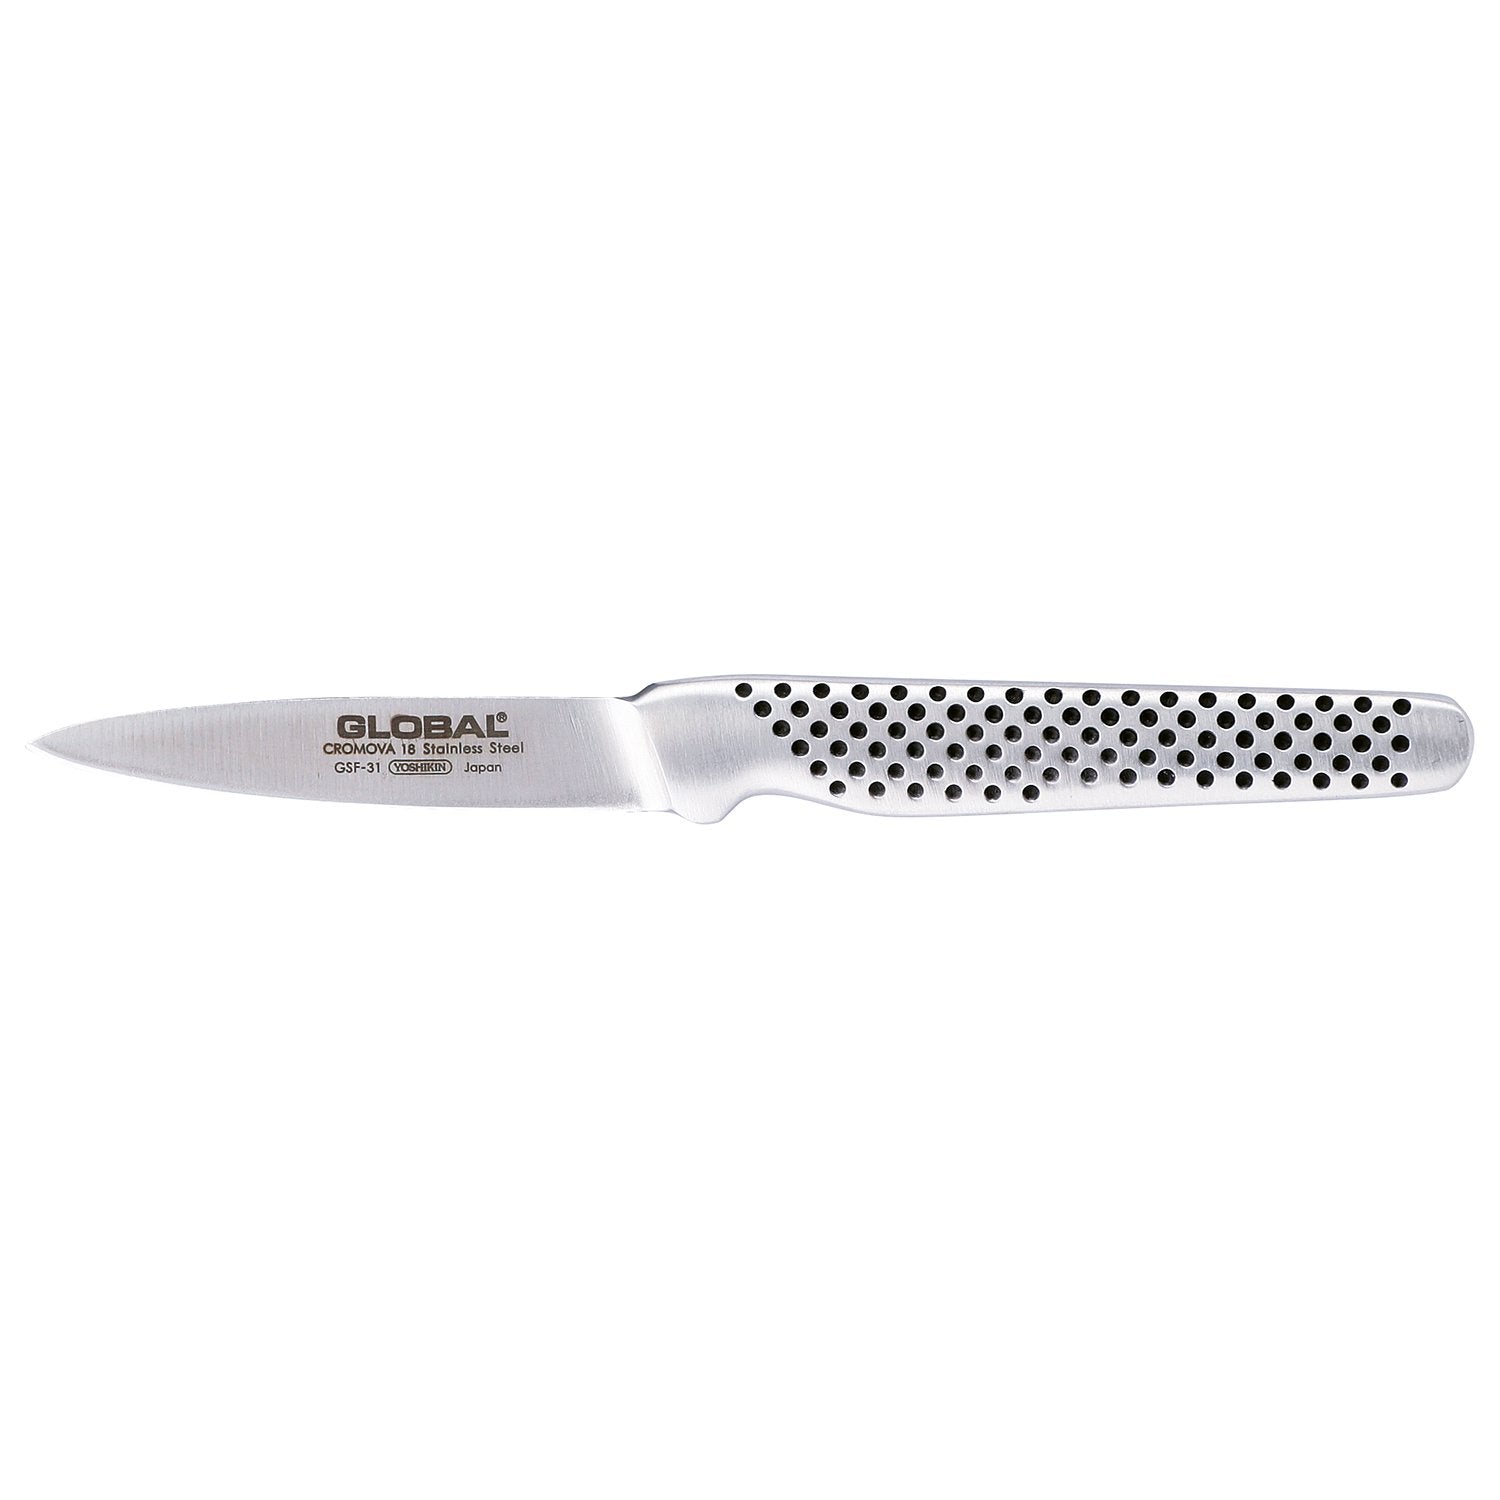 Global GSF 31 rengöringskniv, 8 cm